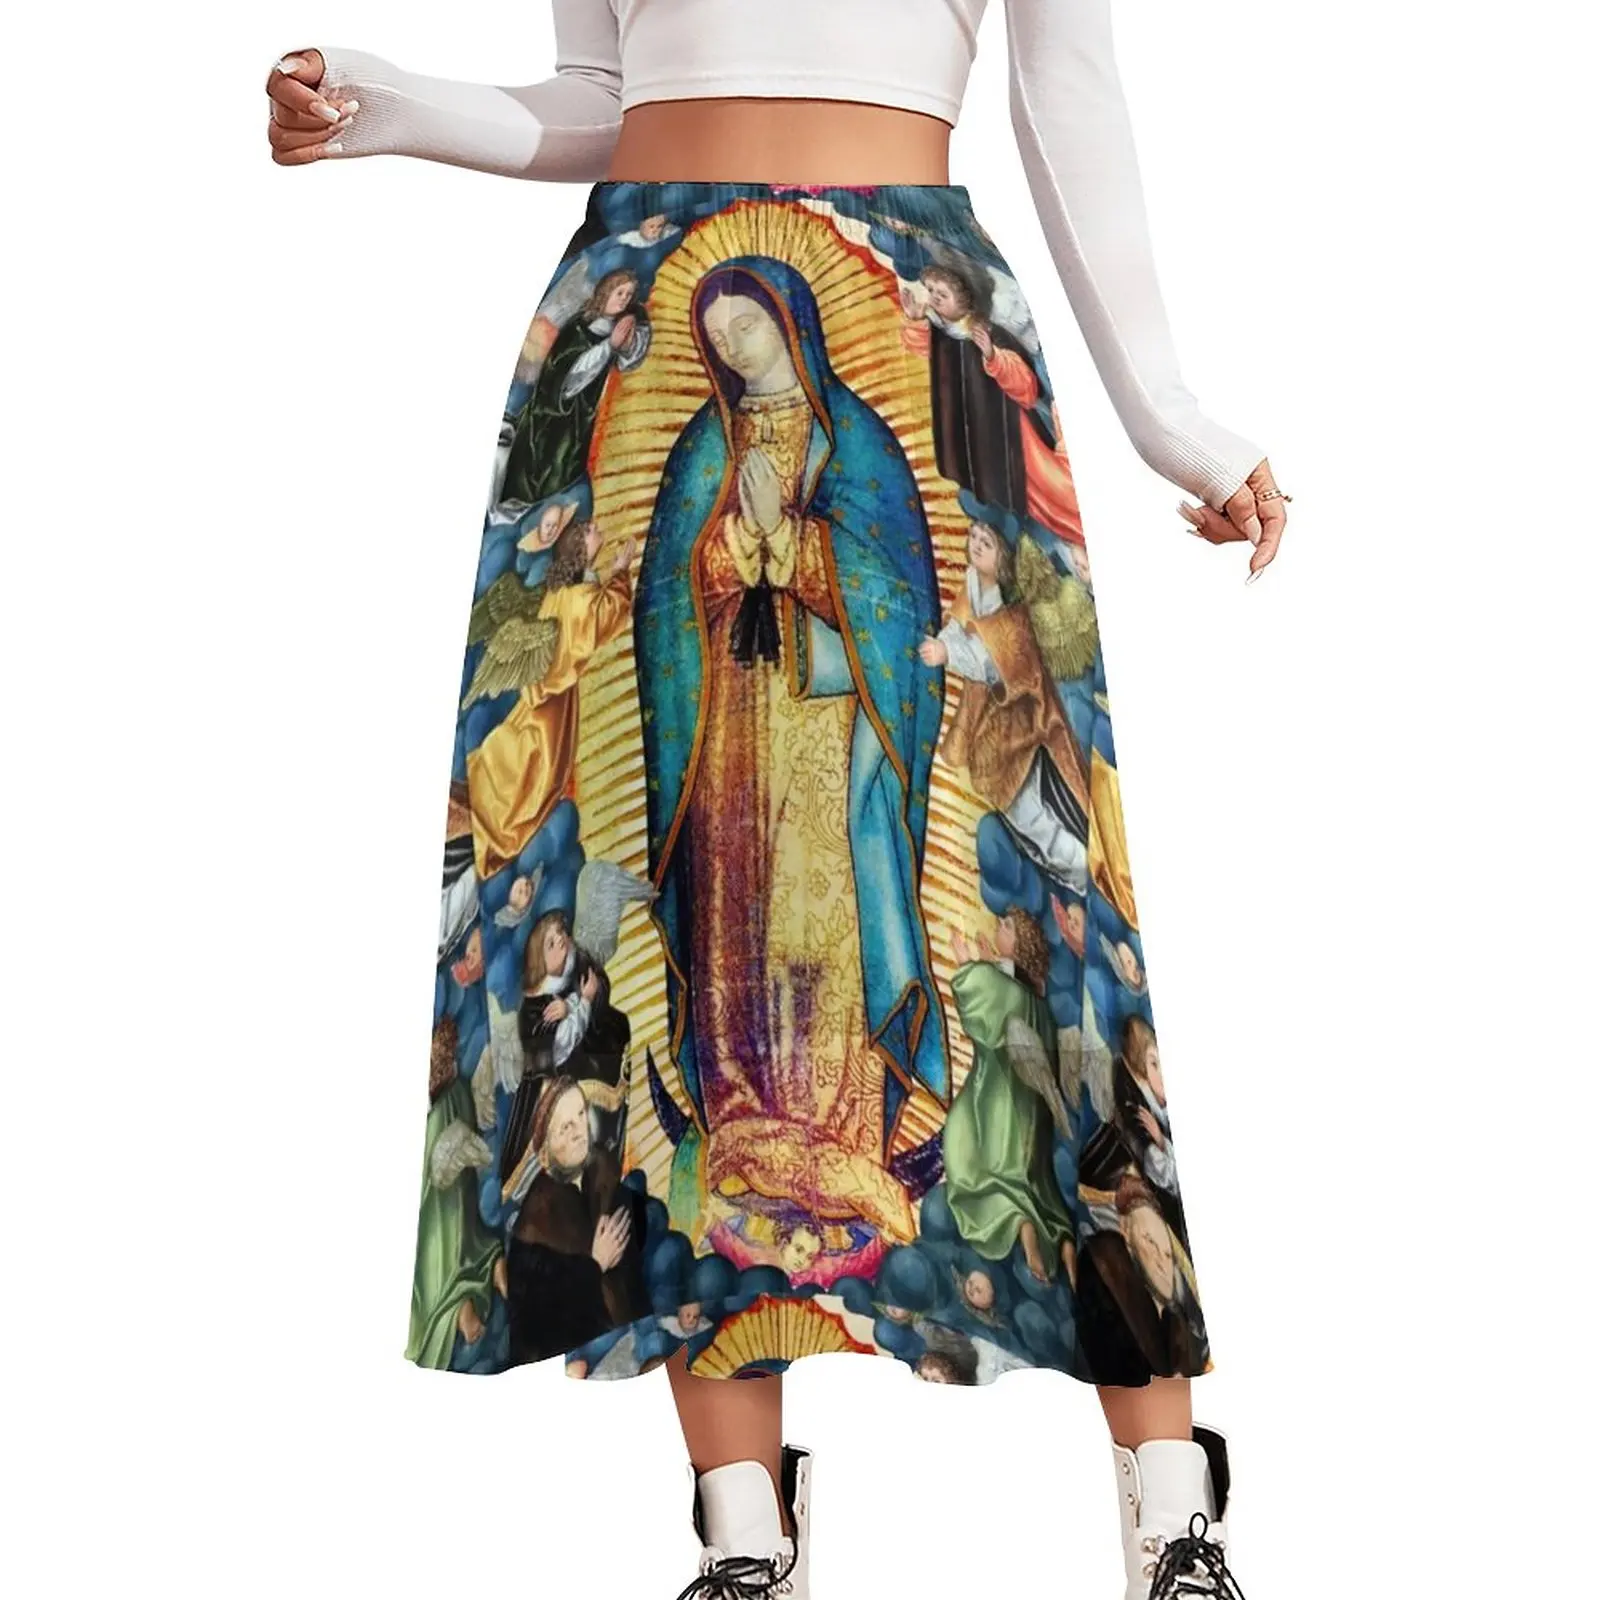 

Guadalupe Virgin Mary Chiffon Skirt Cute Angels Aesthetic Casual Skirts Woman Kawaii Boho Skirt Print Clothes Gift Idea